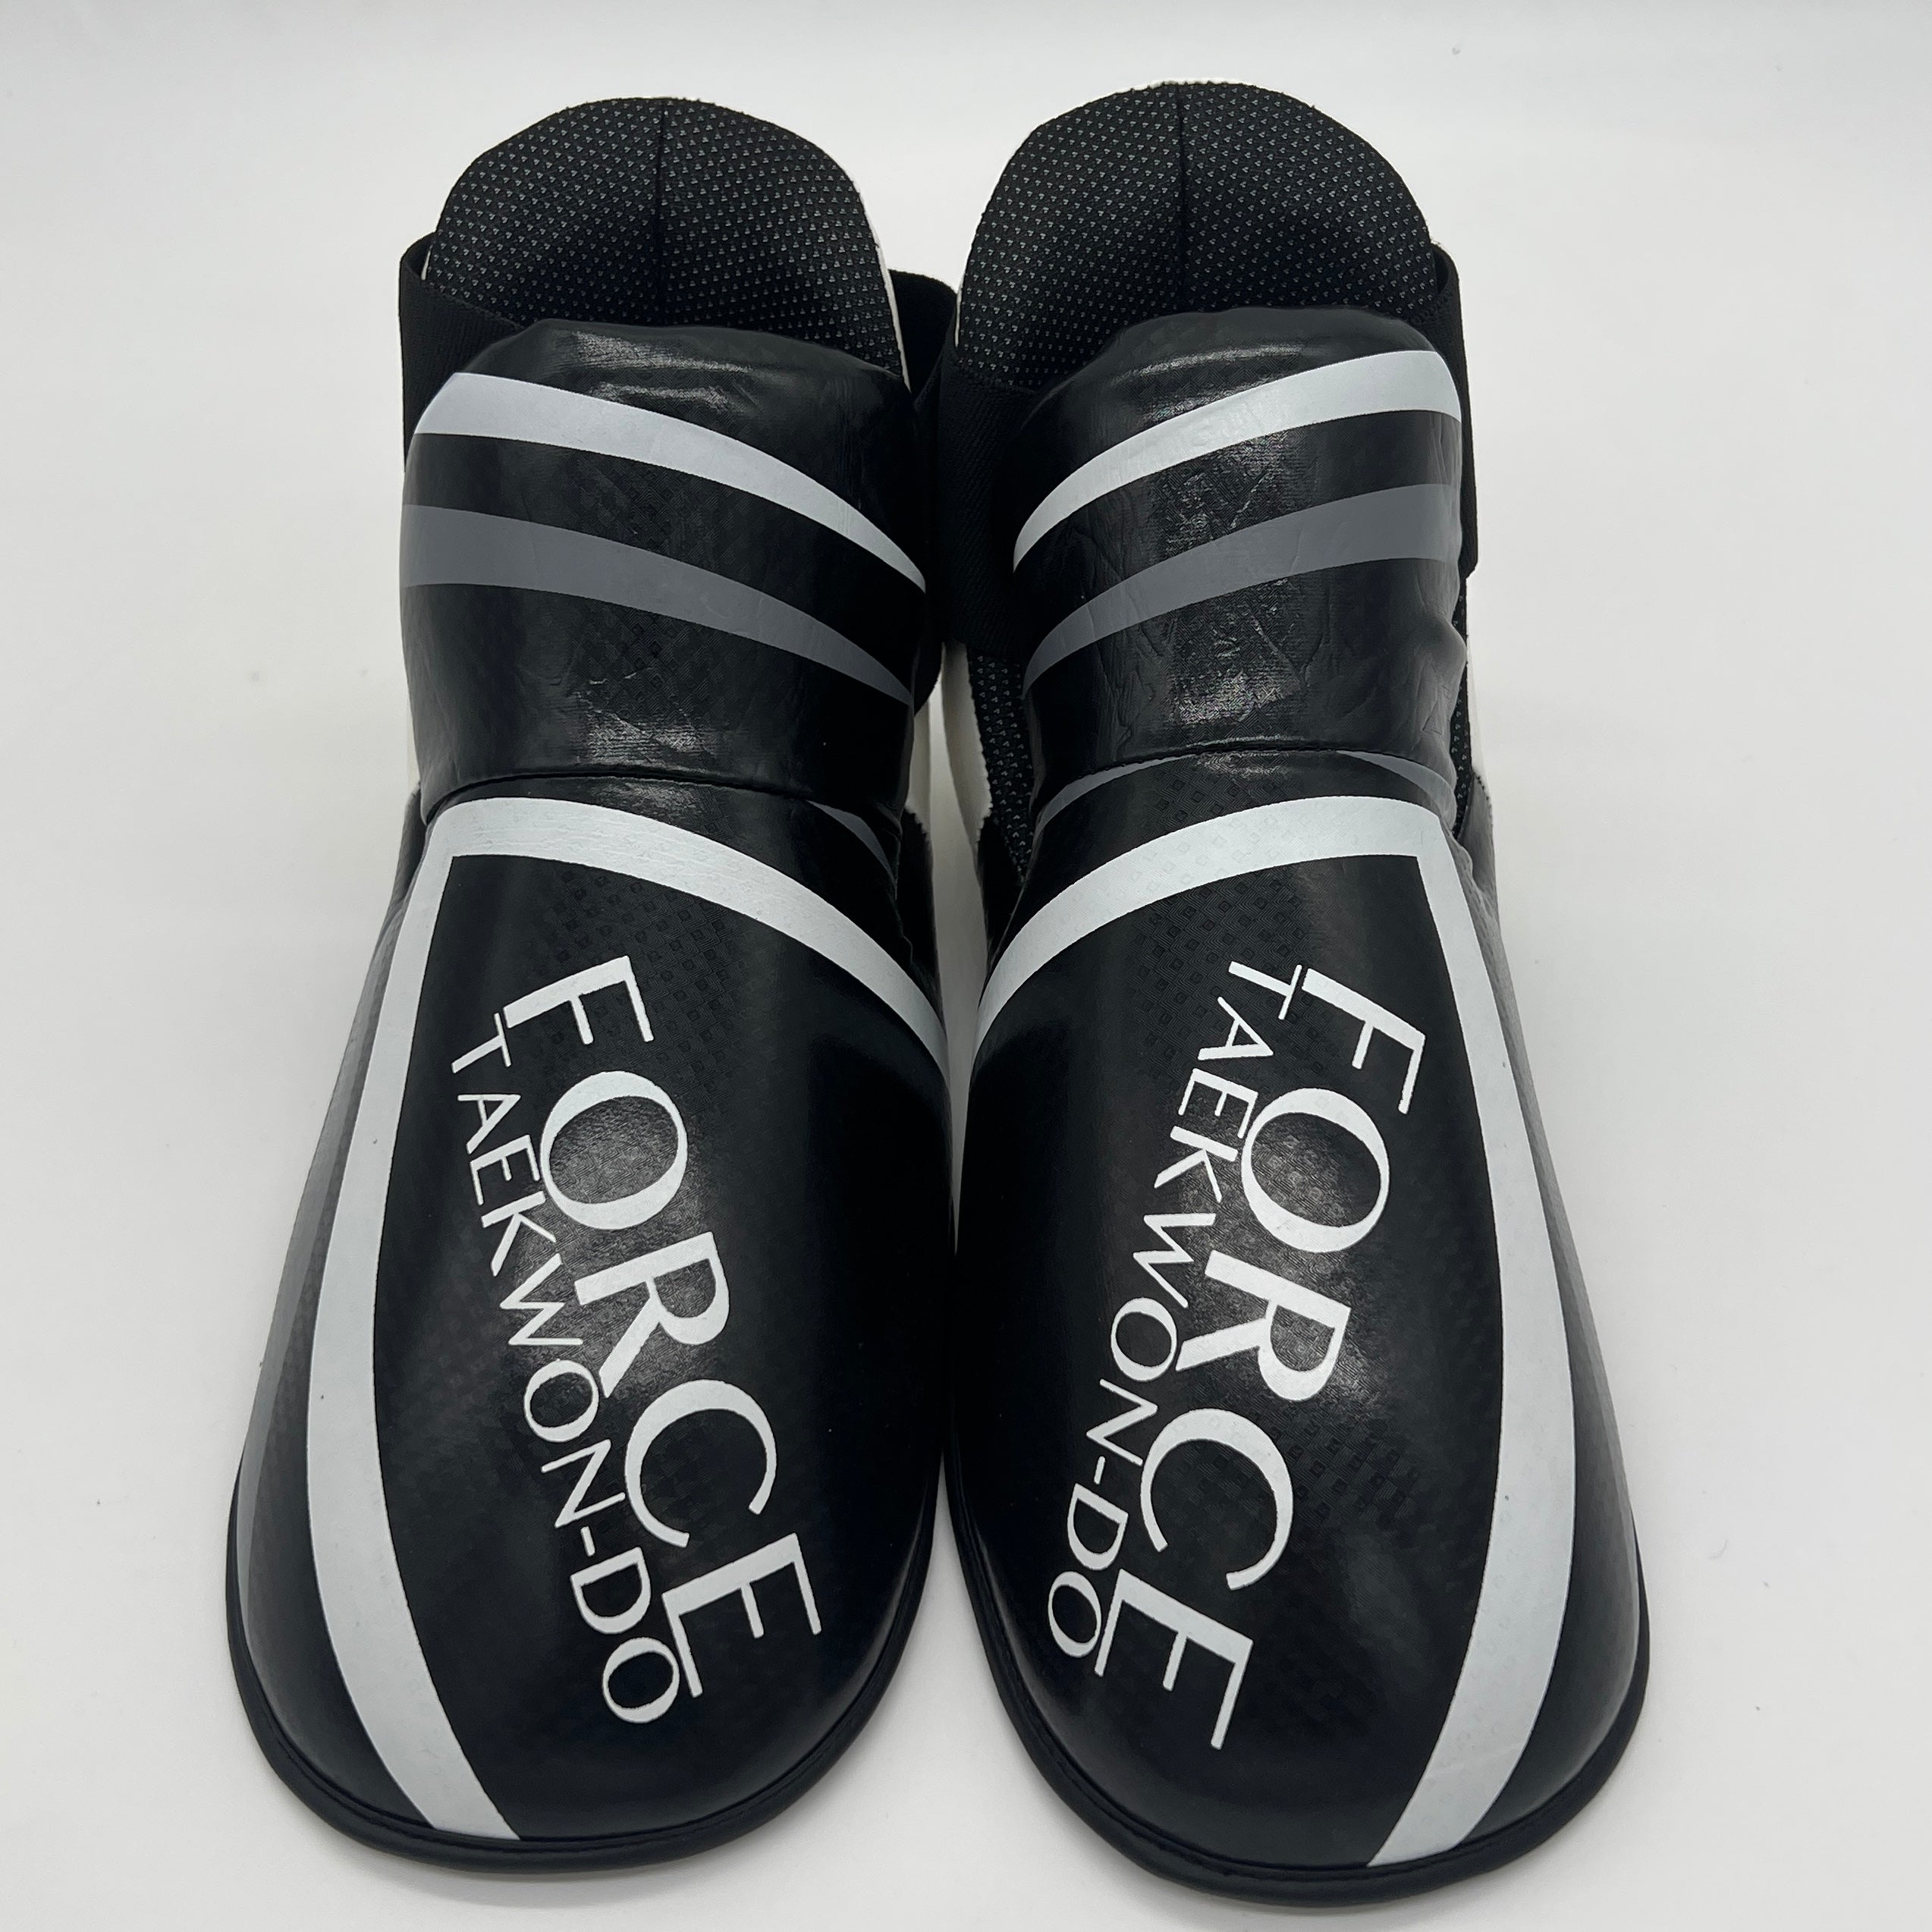 Force Taekwon-do Kick Boots